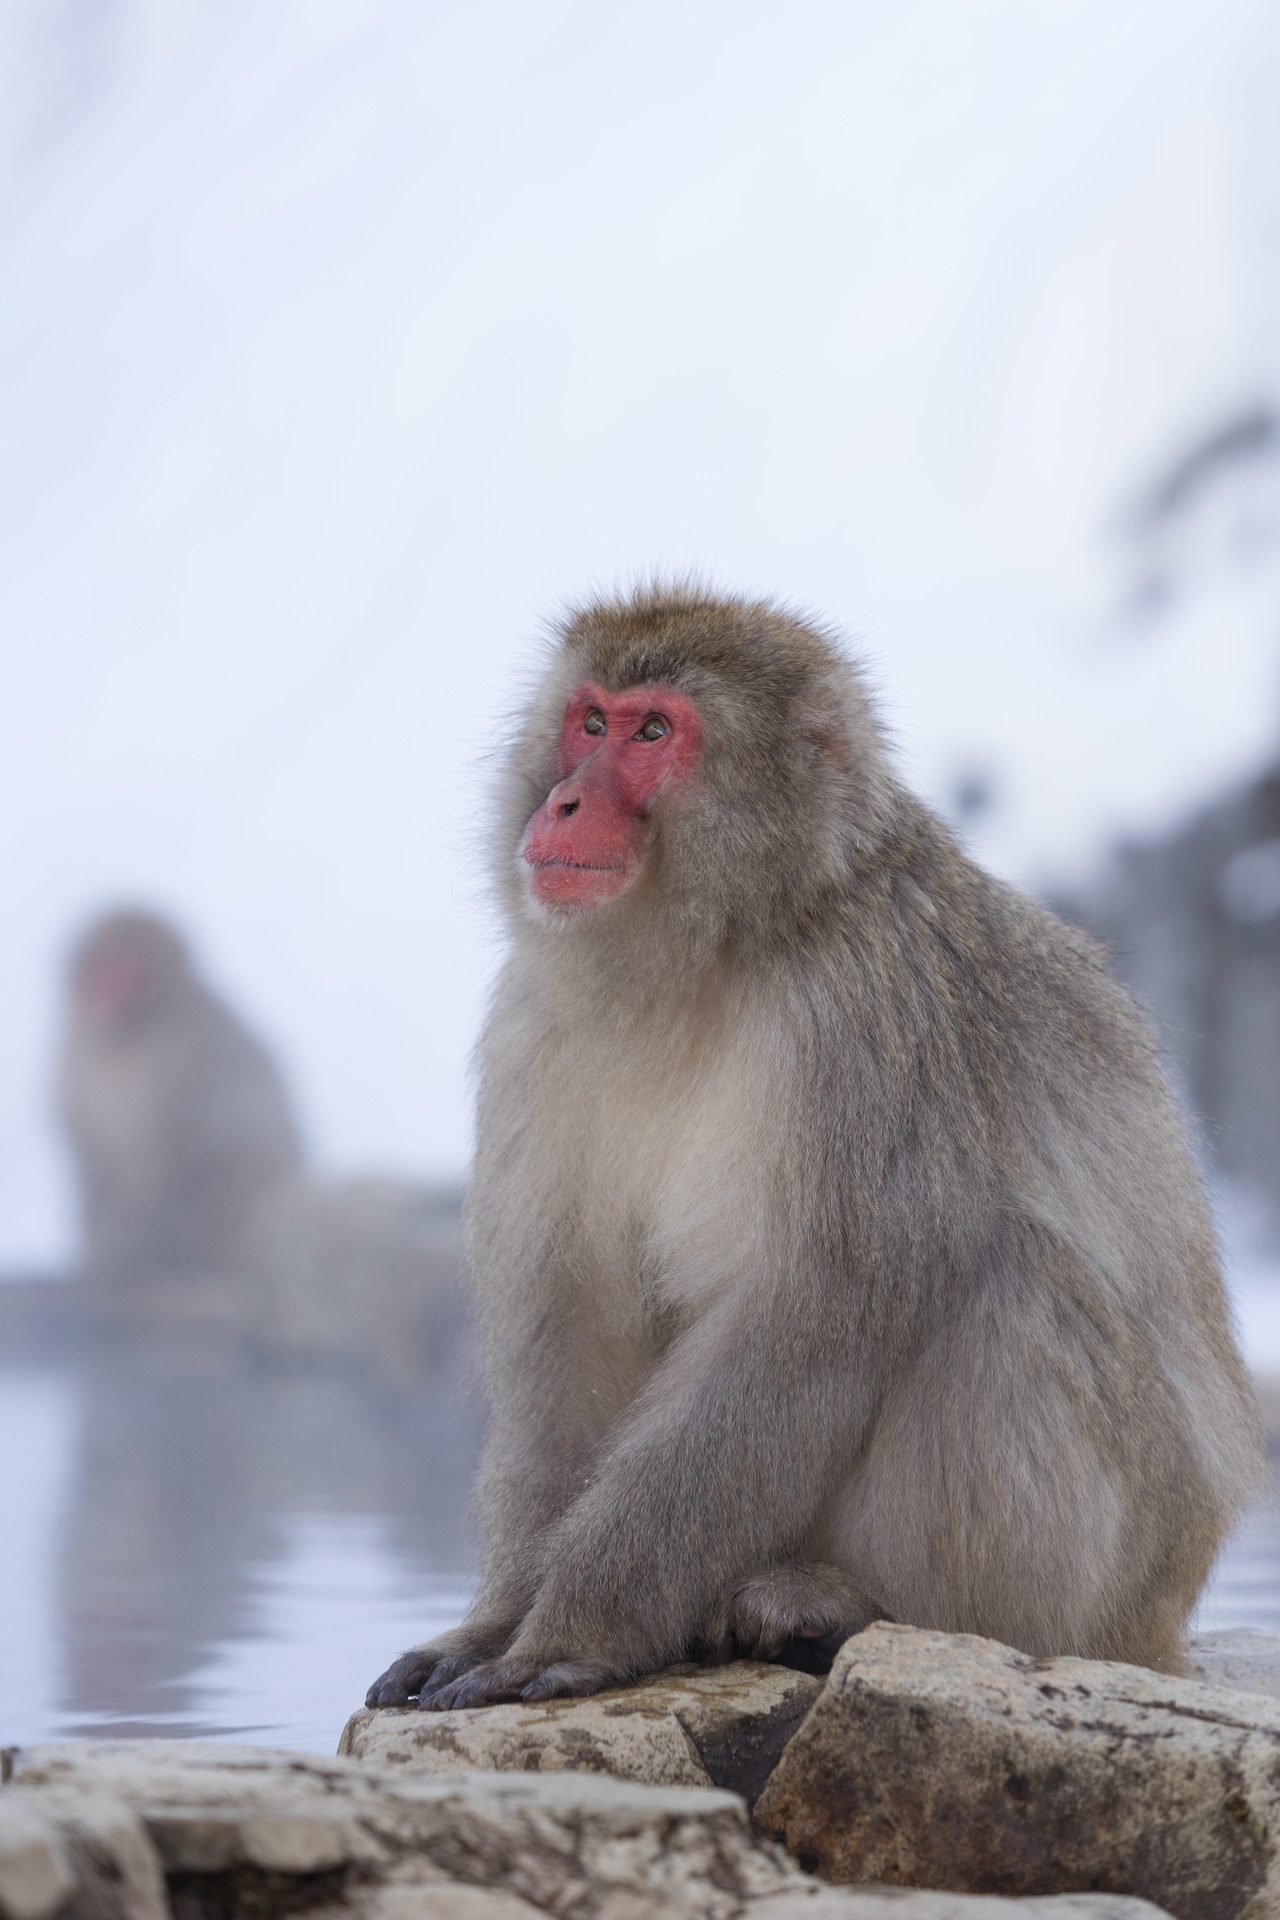 Snow Monkeyを撮影2 2 Aで撮る信州 地獄谷野猿公苑の日本猿 ブログ